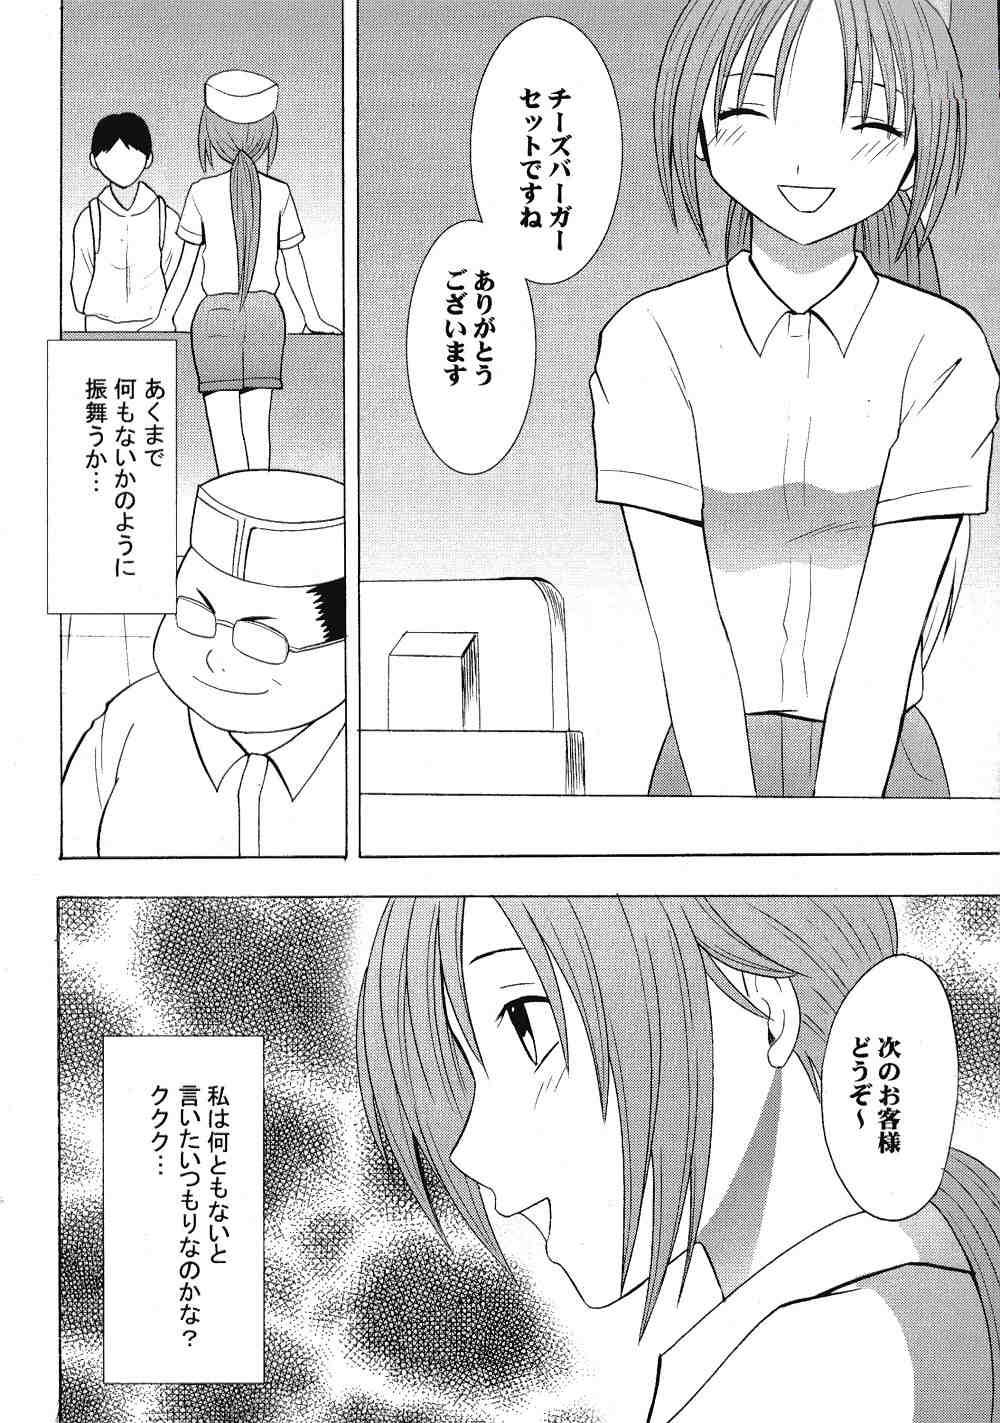 Cuzinho IchigoIchie 2 - Ichigo 100 Gay Oralsex - Page 5